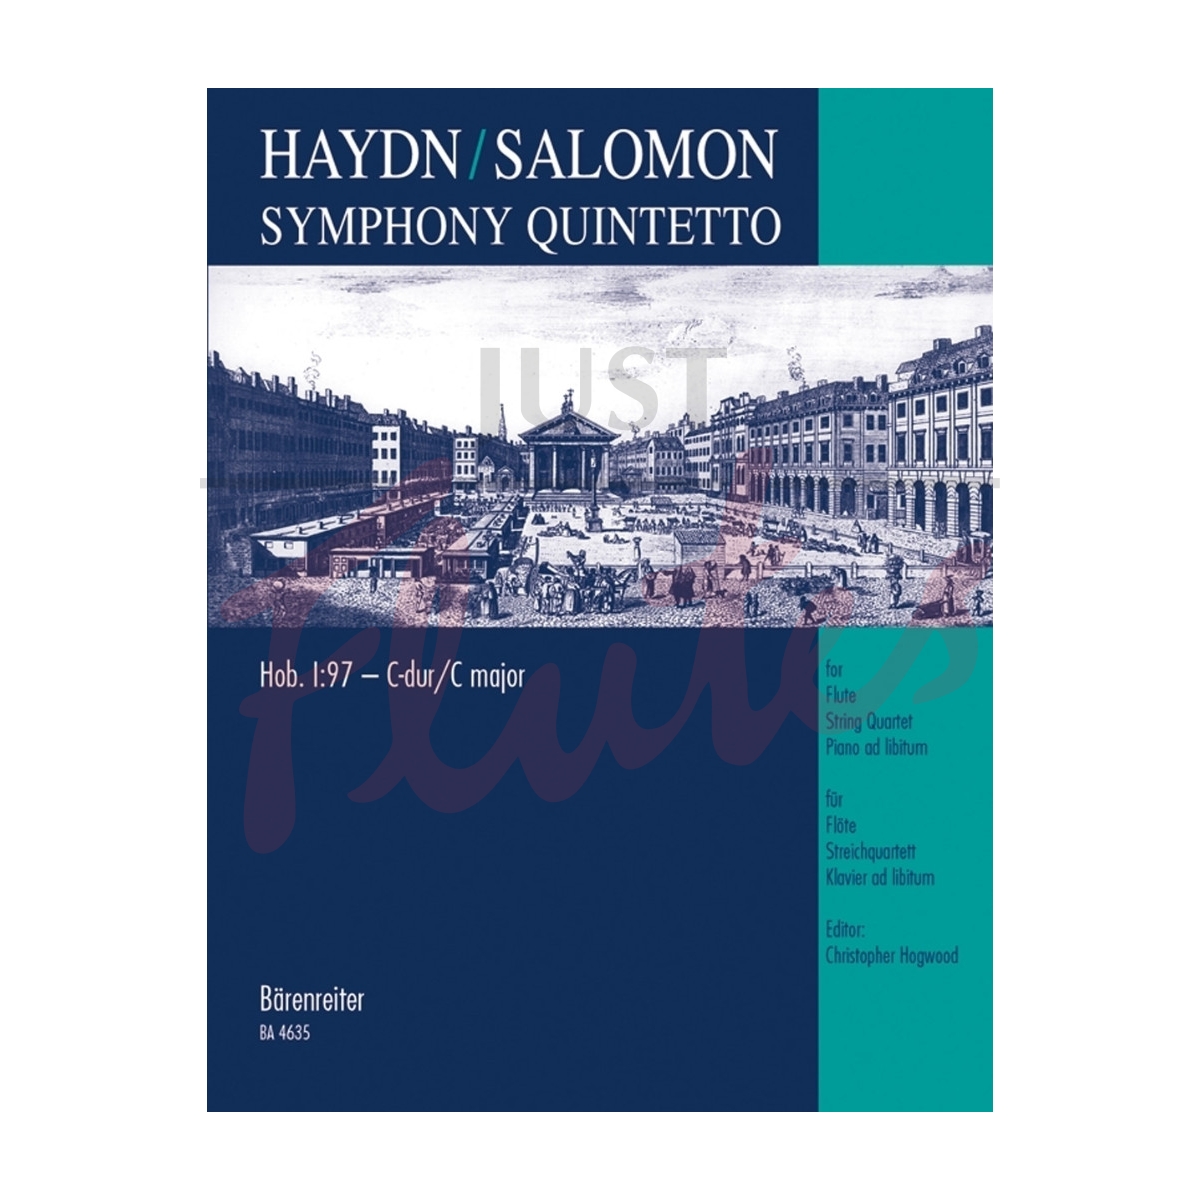 Symphony Quintetto in C major for Flute, String Quartet and Piano ad libitum